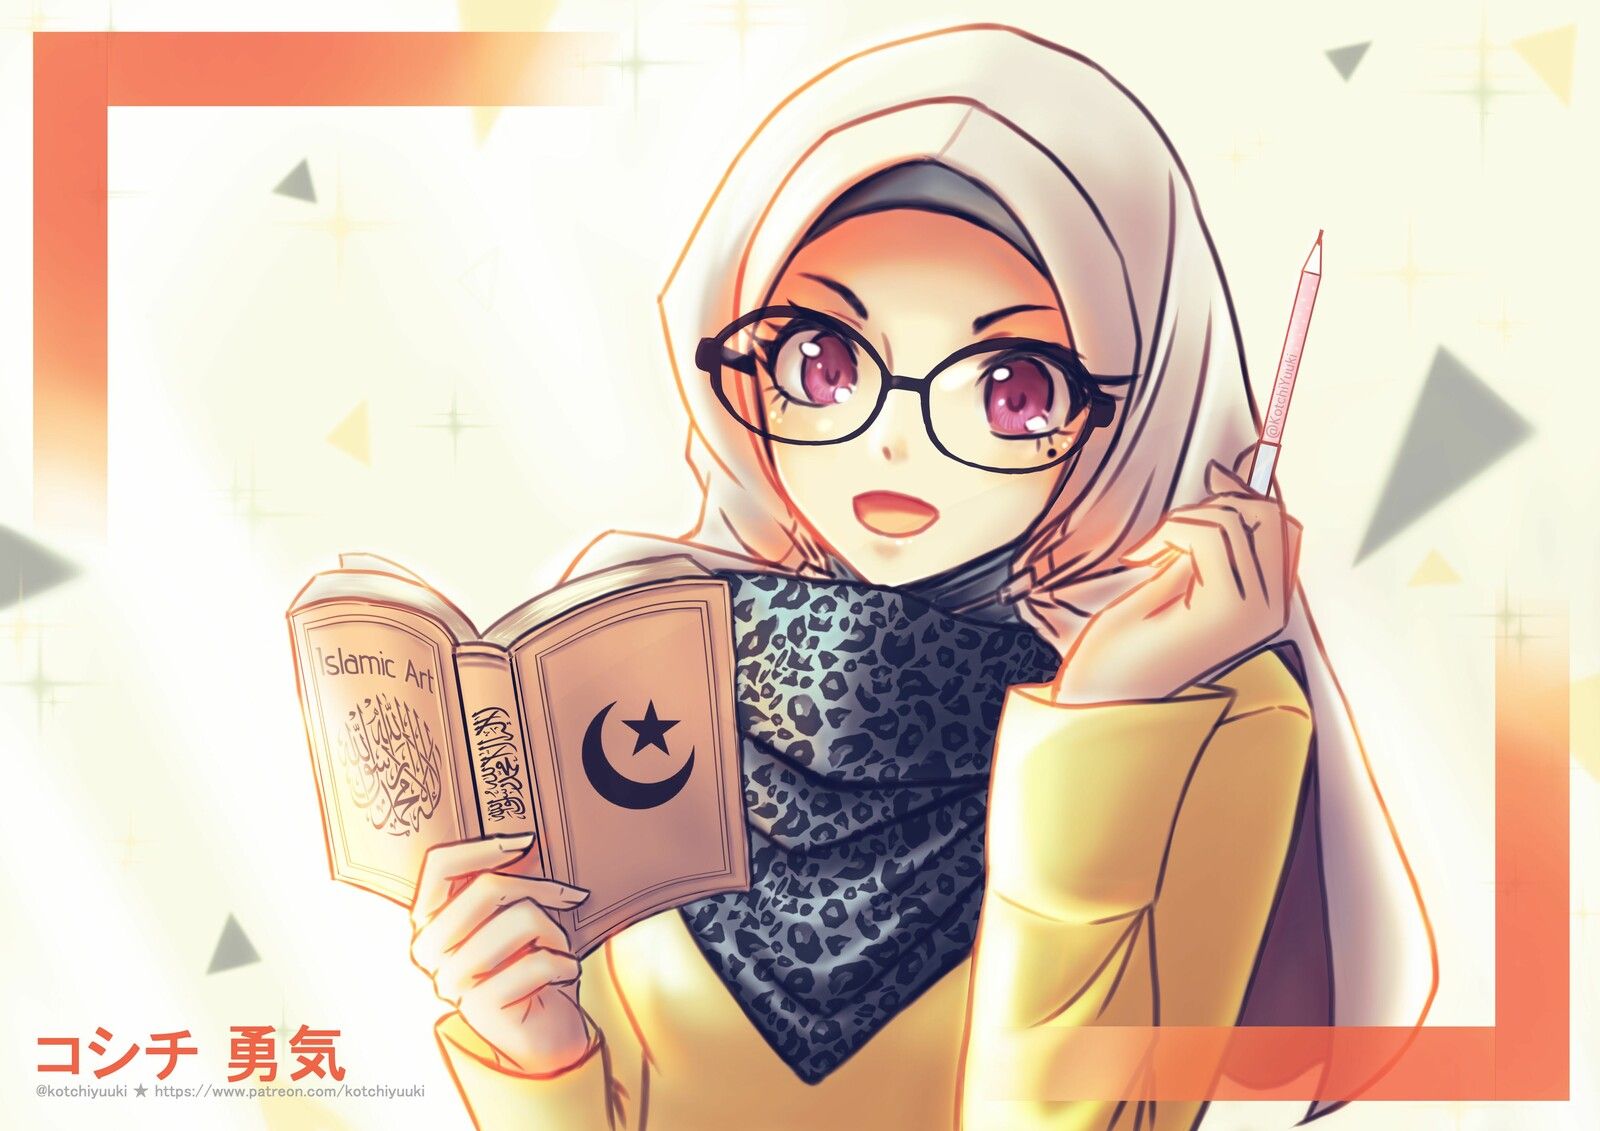 Hijab Anime Girl Wallpapers - Wallpaper Cave